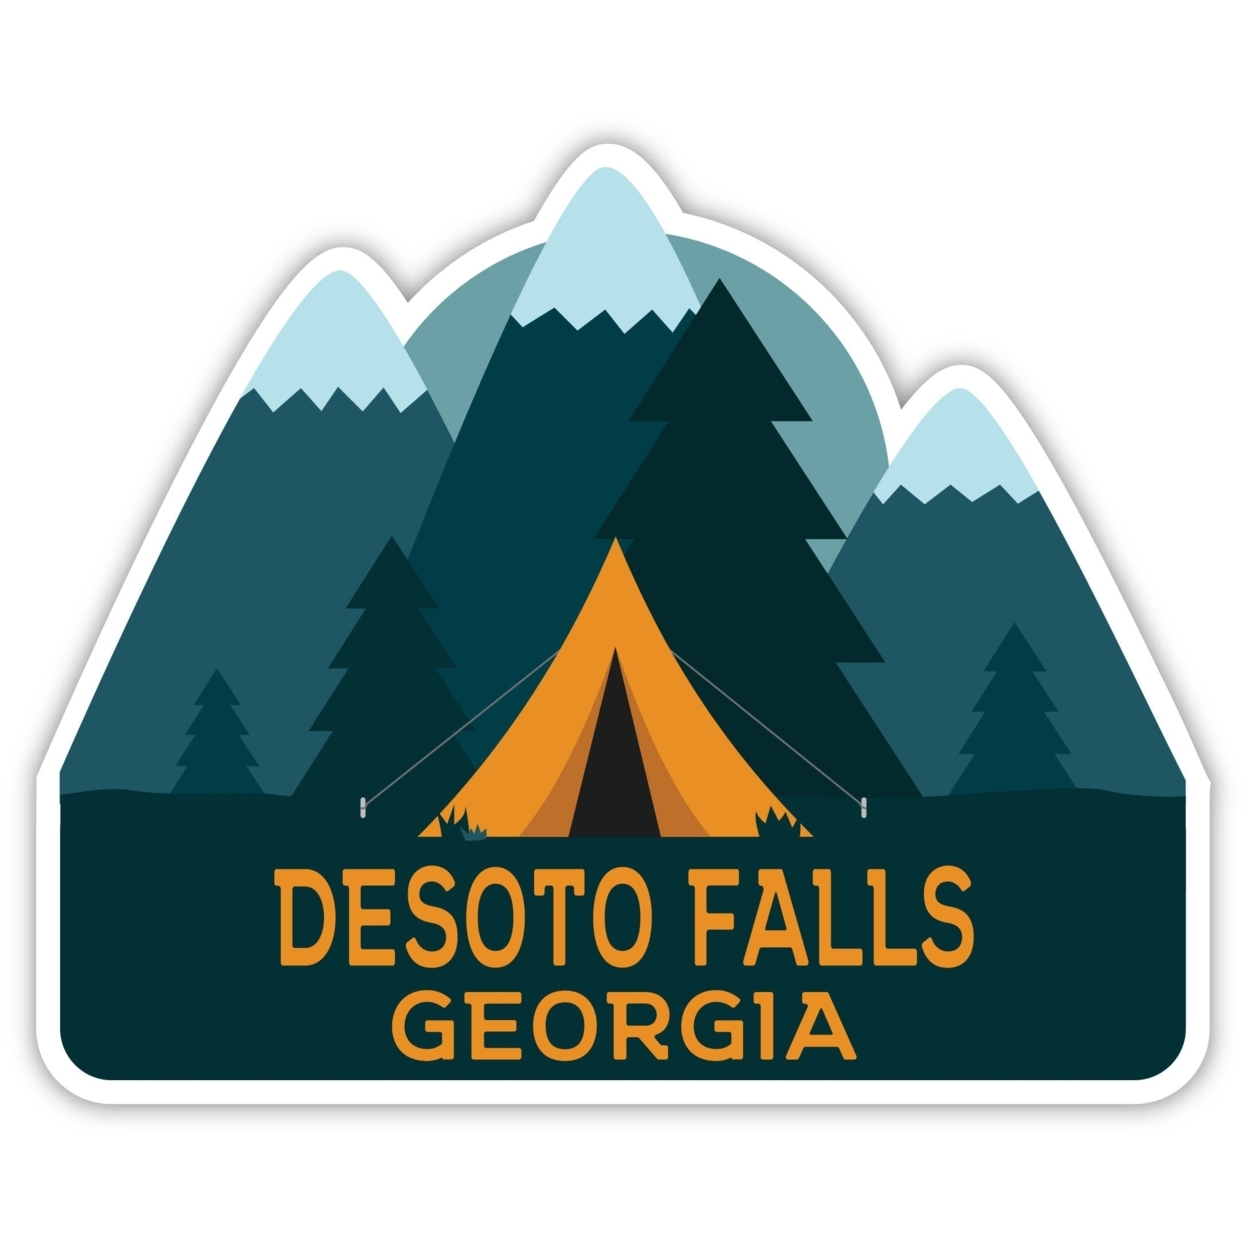 DeSoto Falls Georgia Souvenir Decorative Stickers (Choose Theme And Size) - Single Unit, 6-Inch, Tent